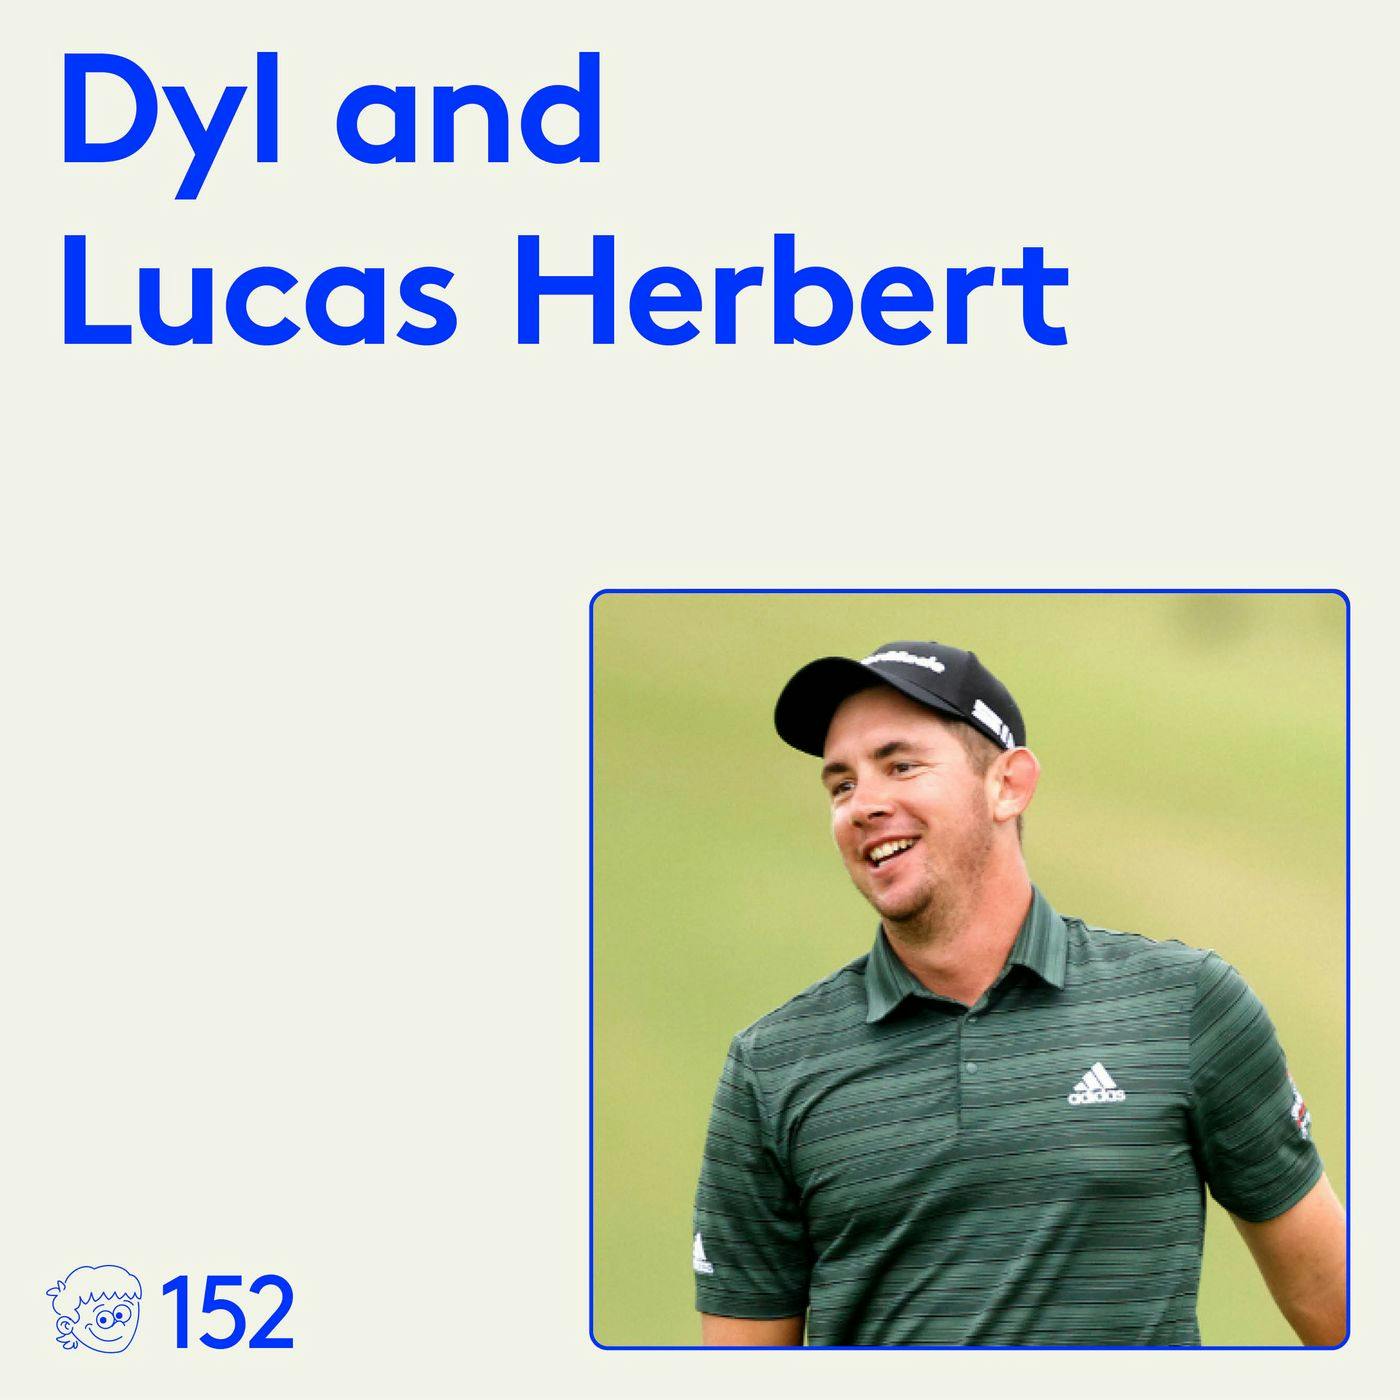 #152 Lucas Herbert from The Open in Scotland